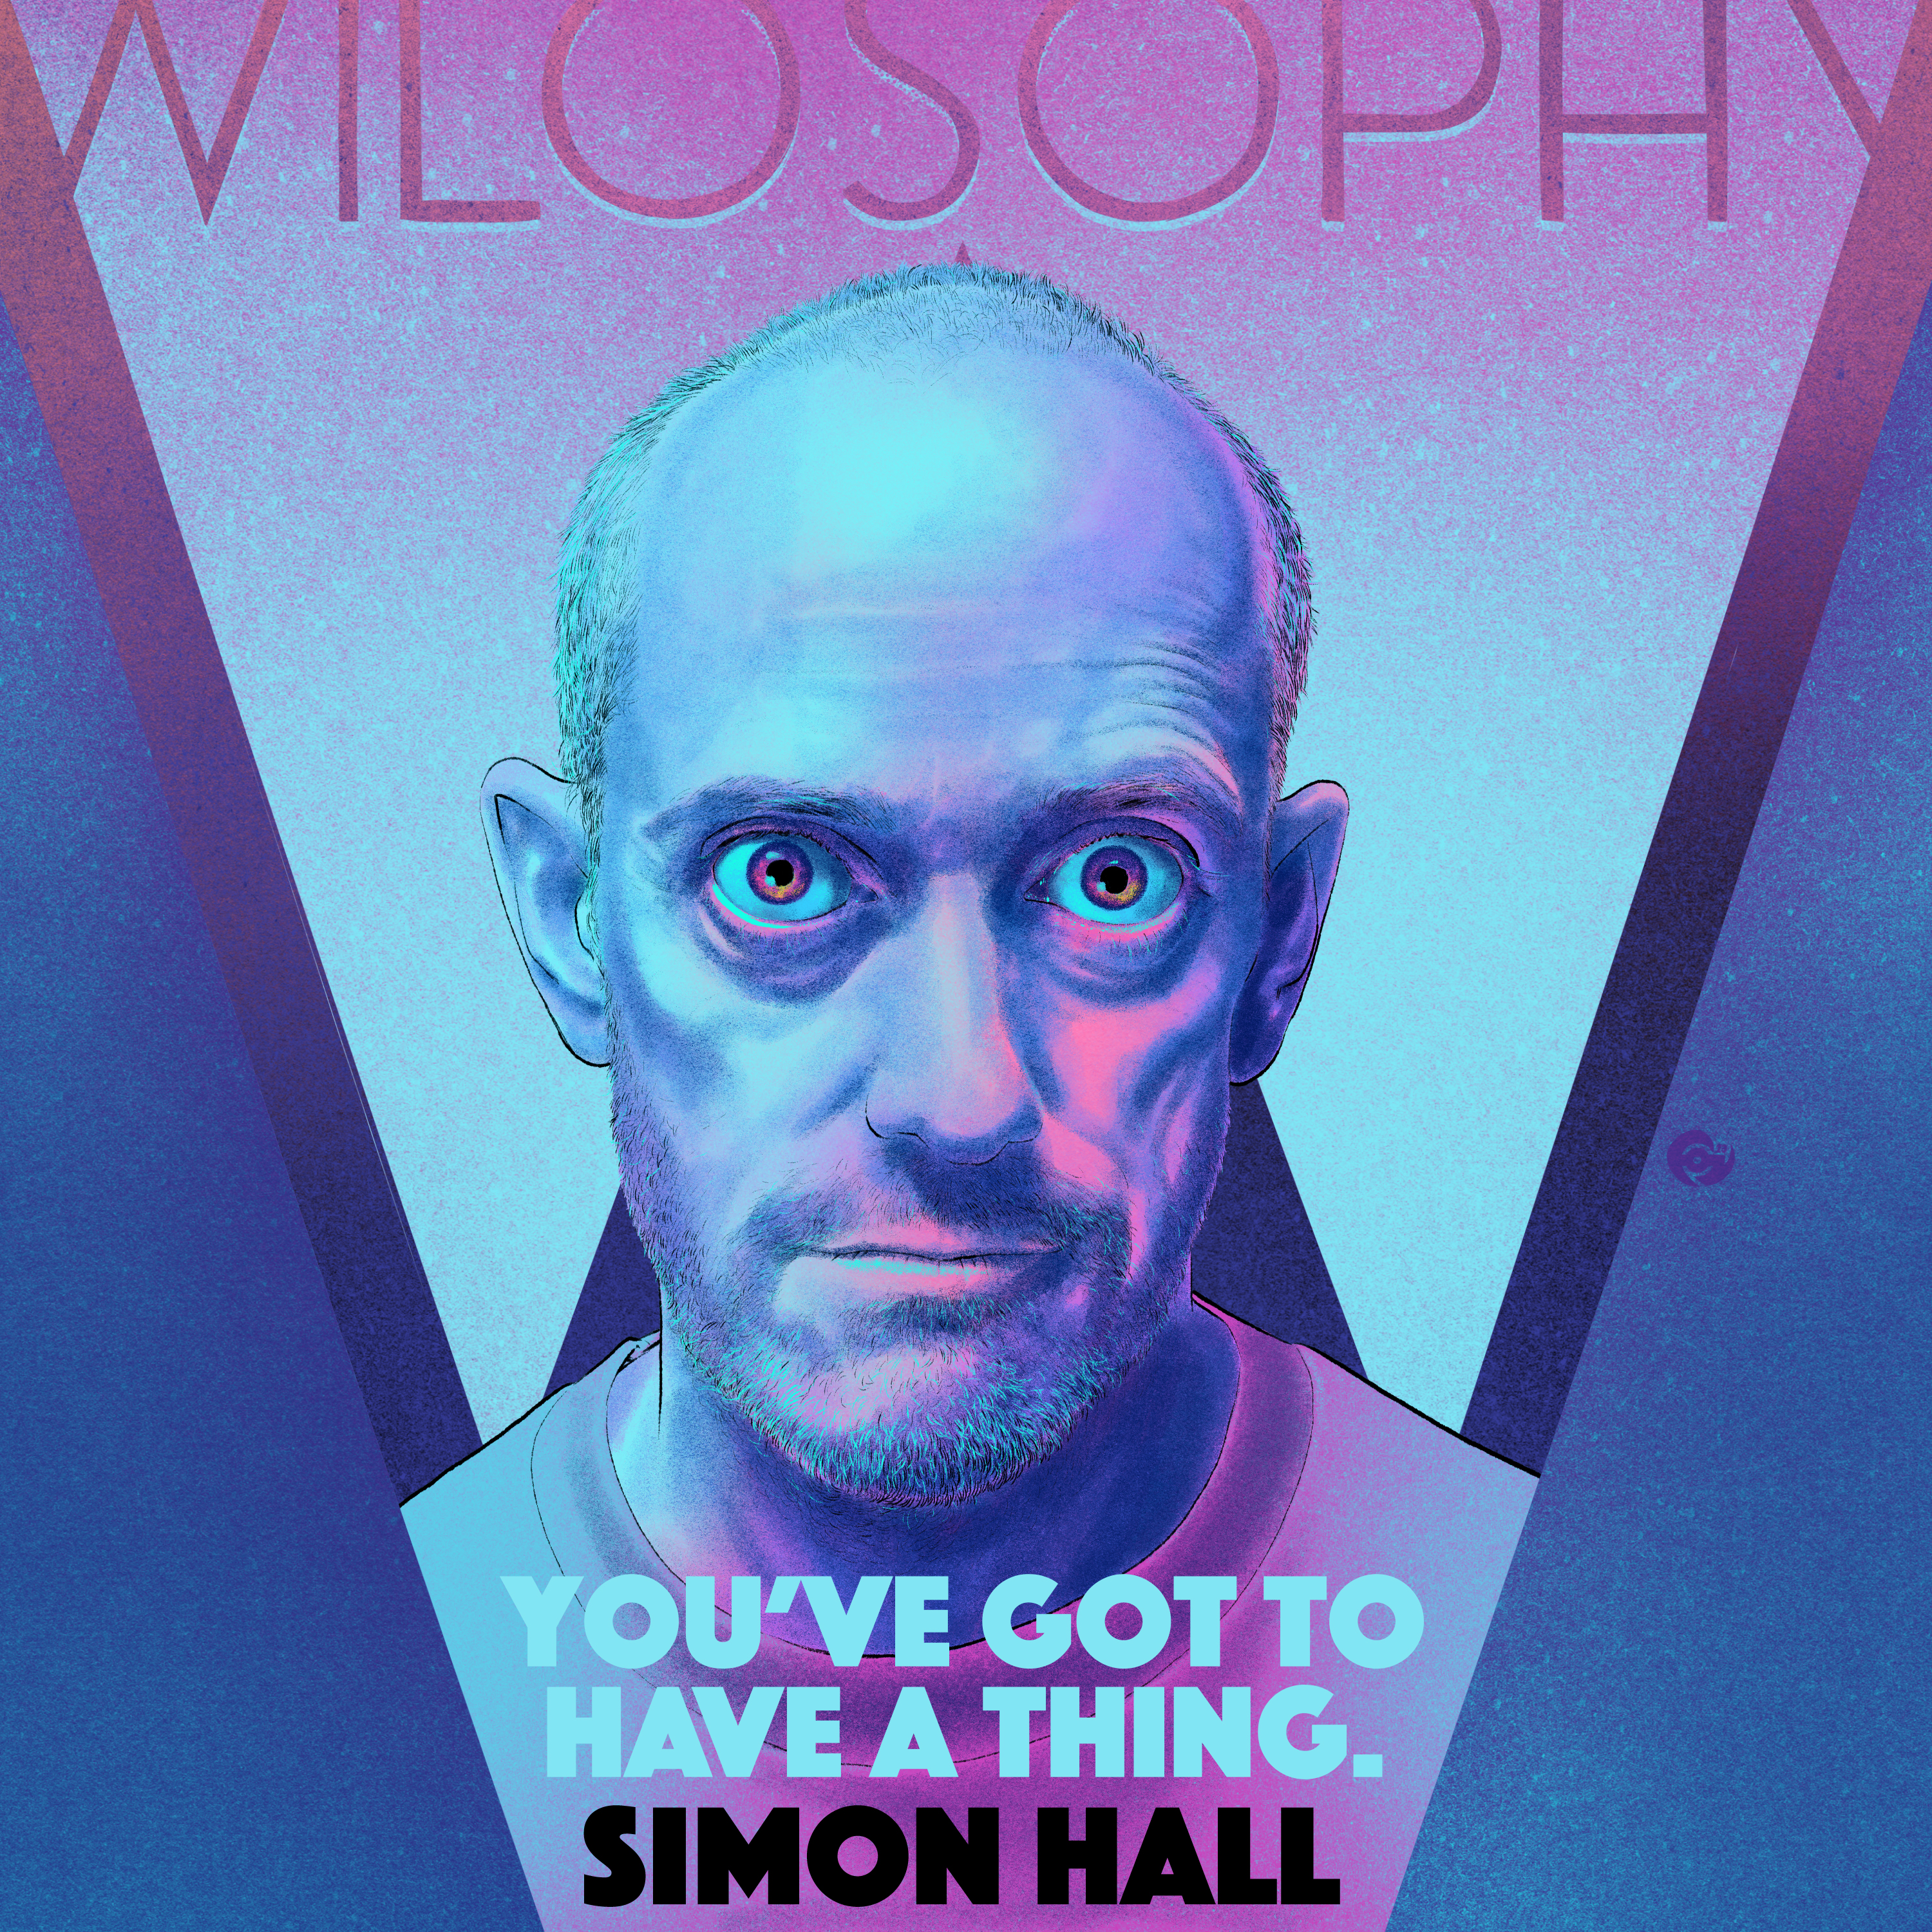 WILOSOPHY with Yon (Simon Hall)